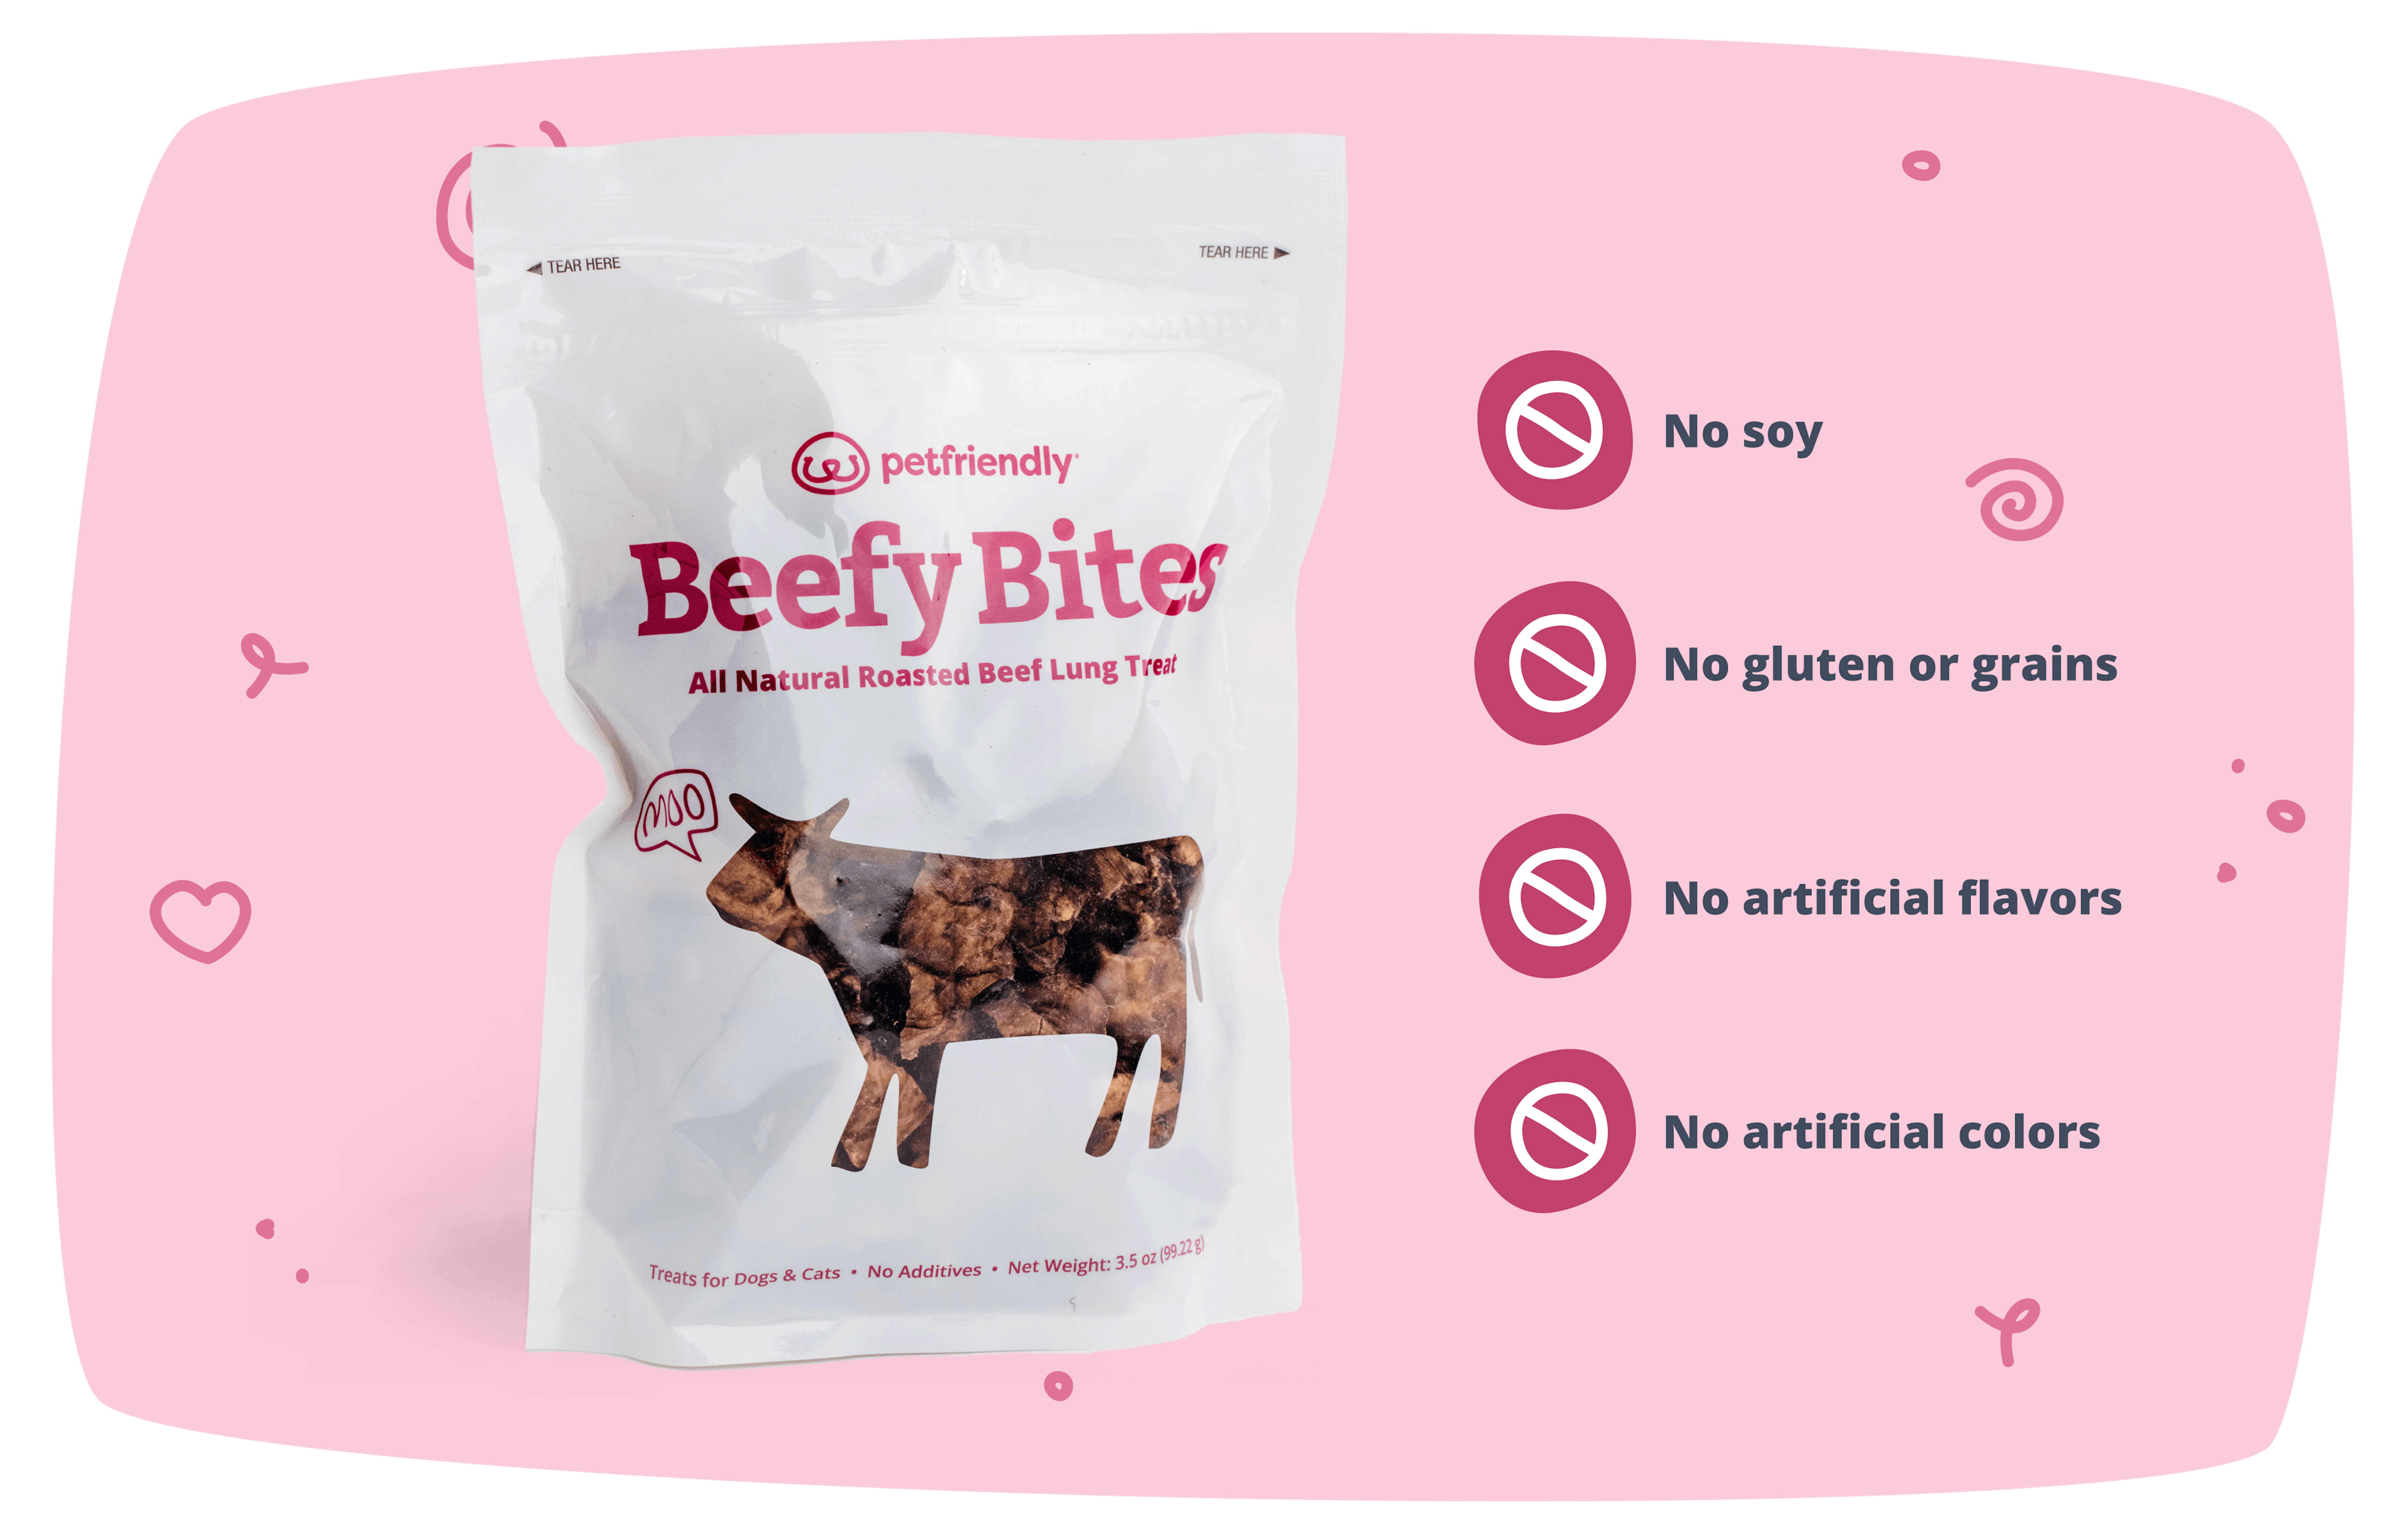 Beefy Bites - No soy, no gluten or grains, no artificial flavors, no artificial colors